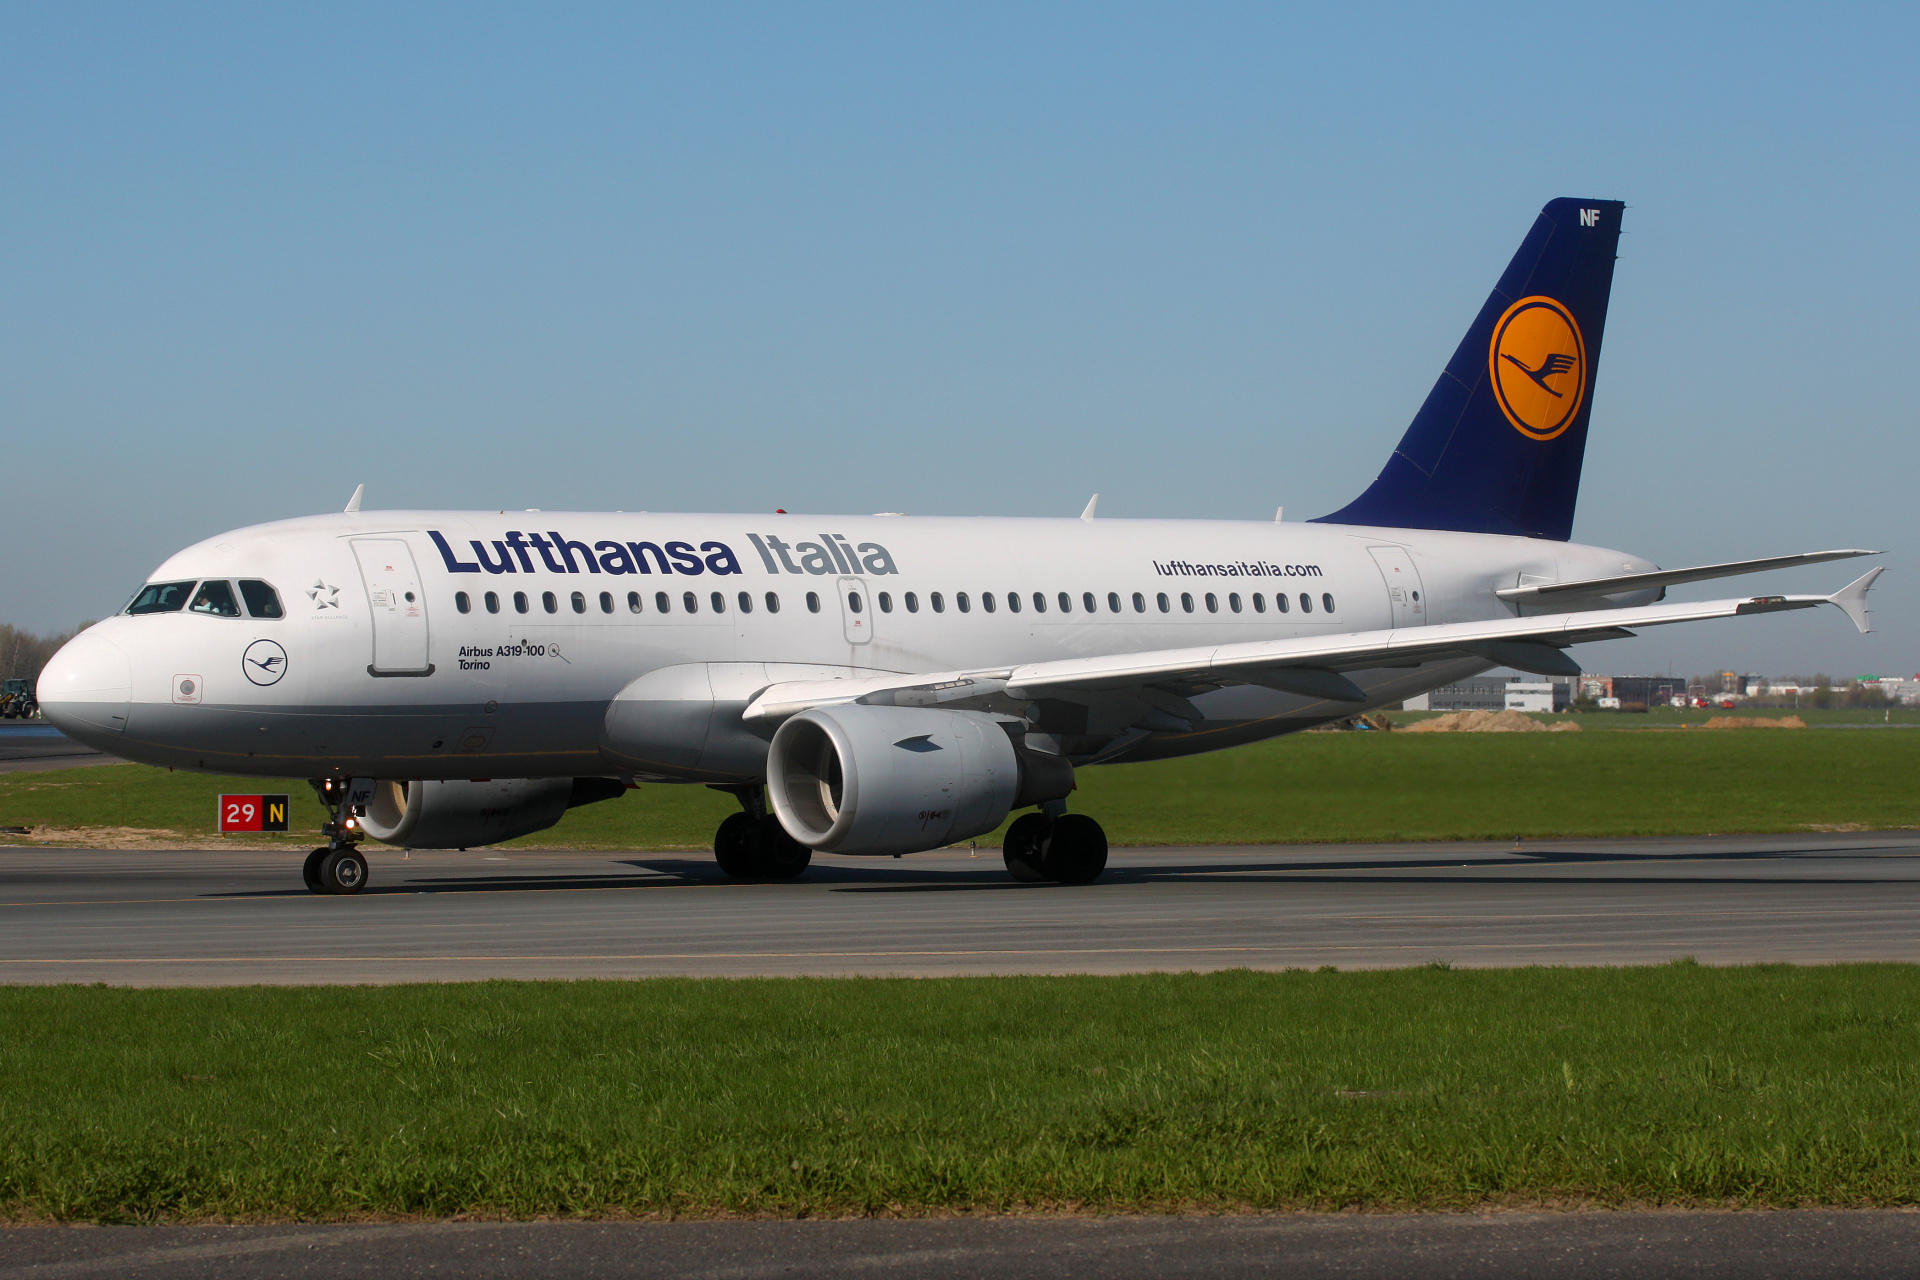 D-AKNF, Lufthansa Italia (Samoloty » Spotting na EPWA » Airbus A319-100)